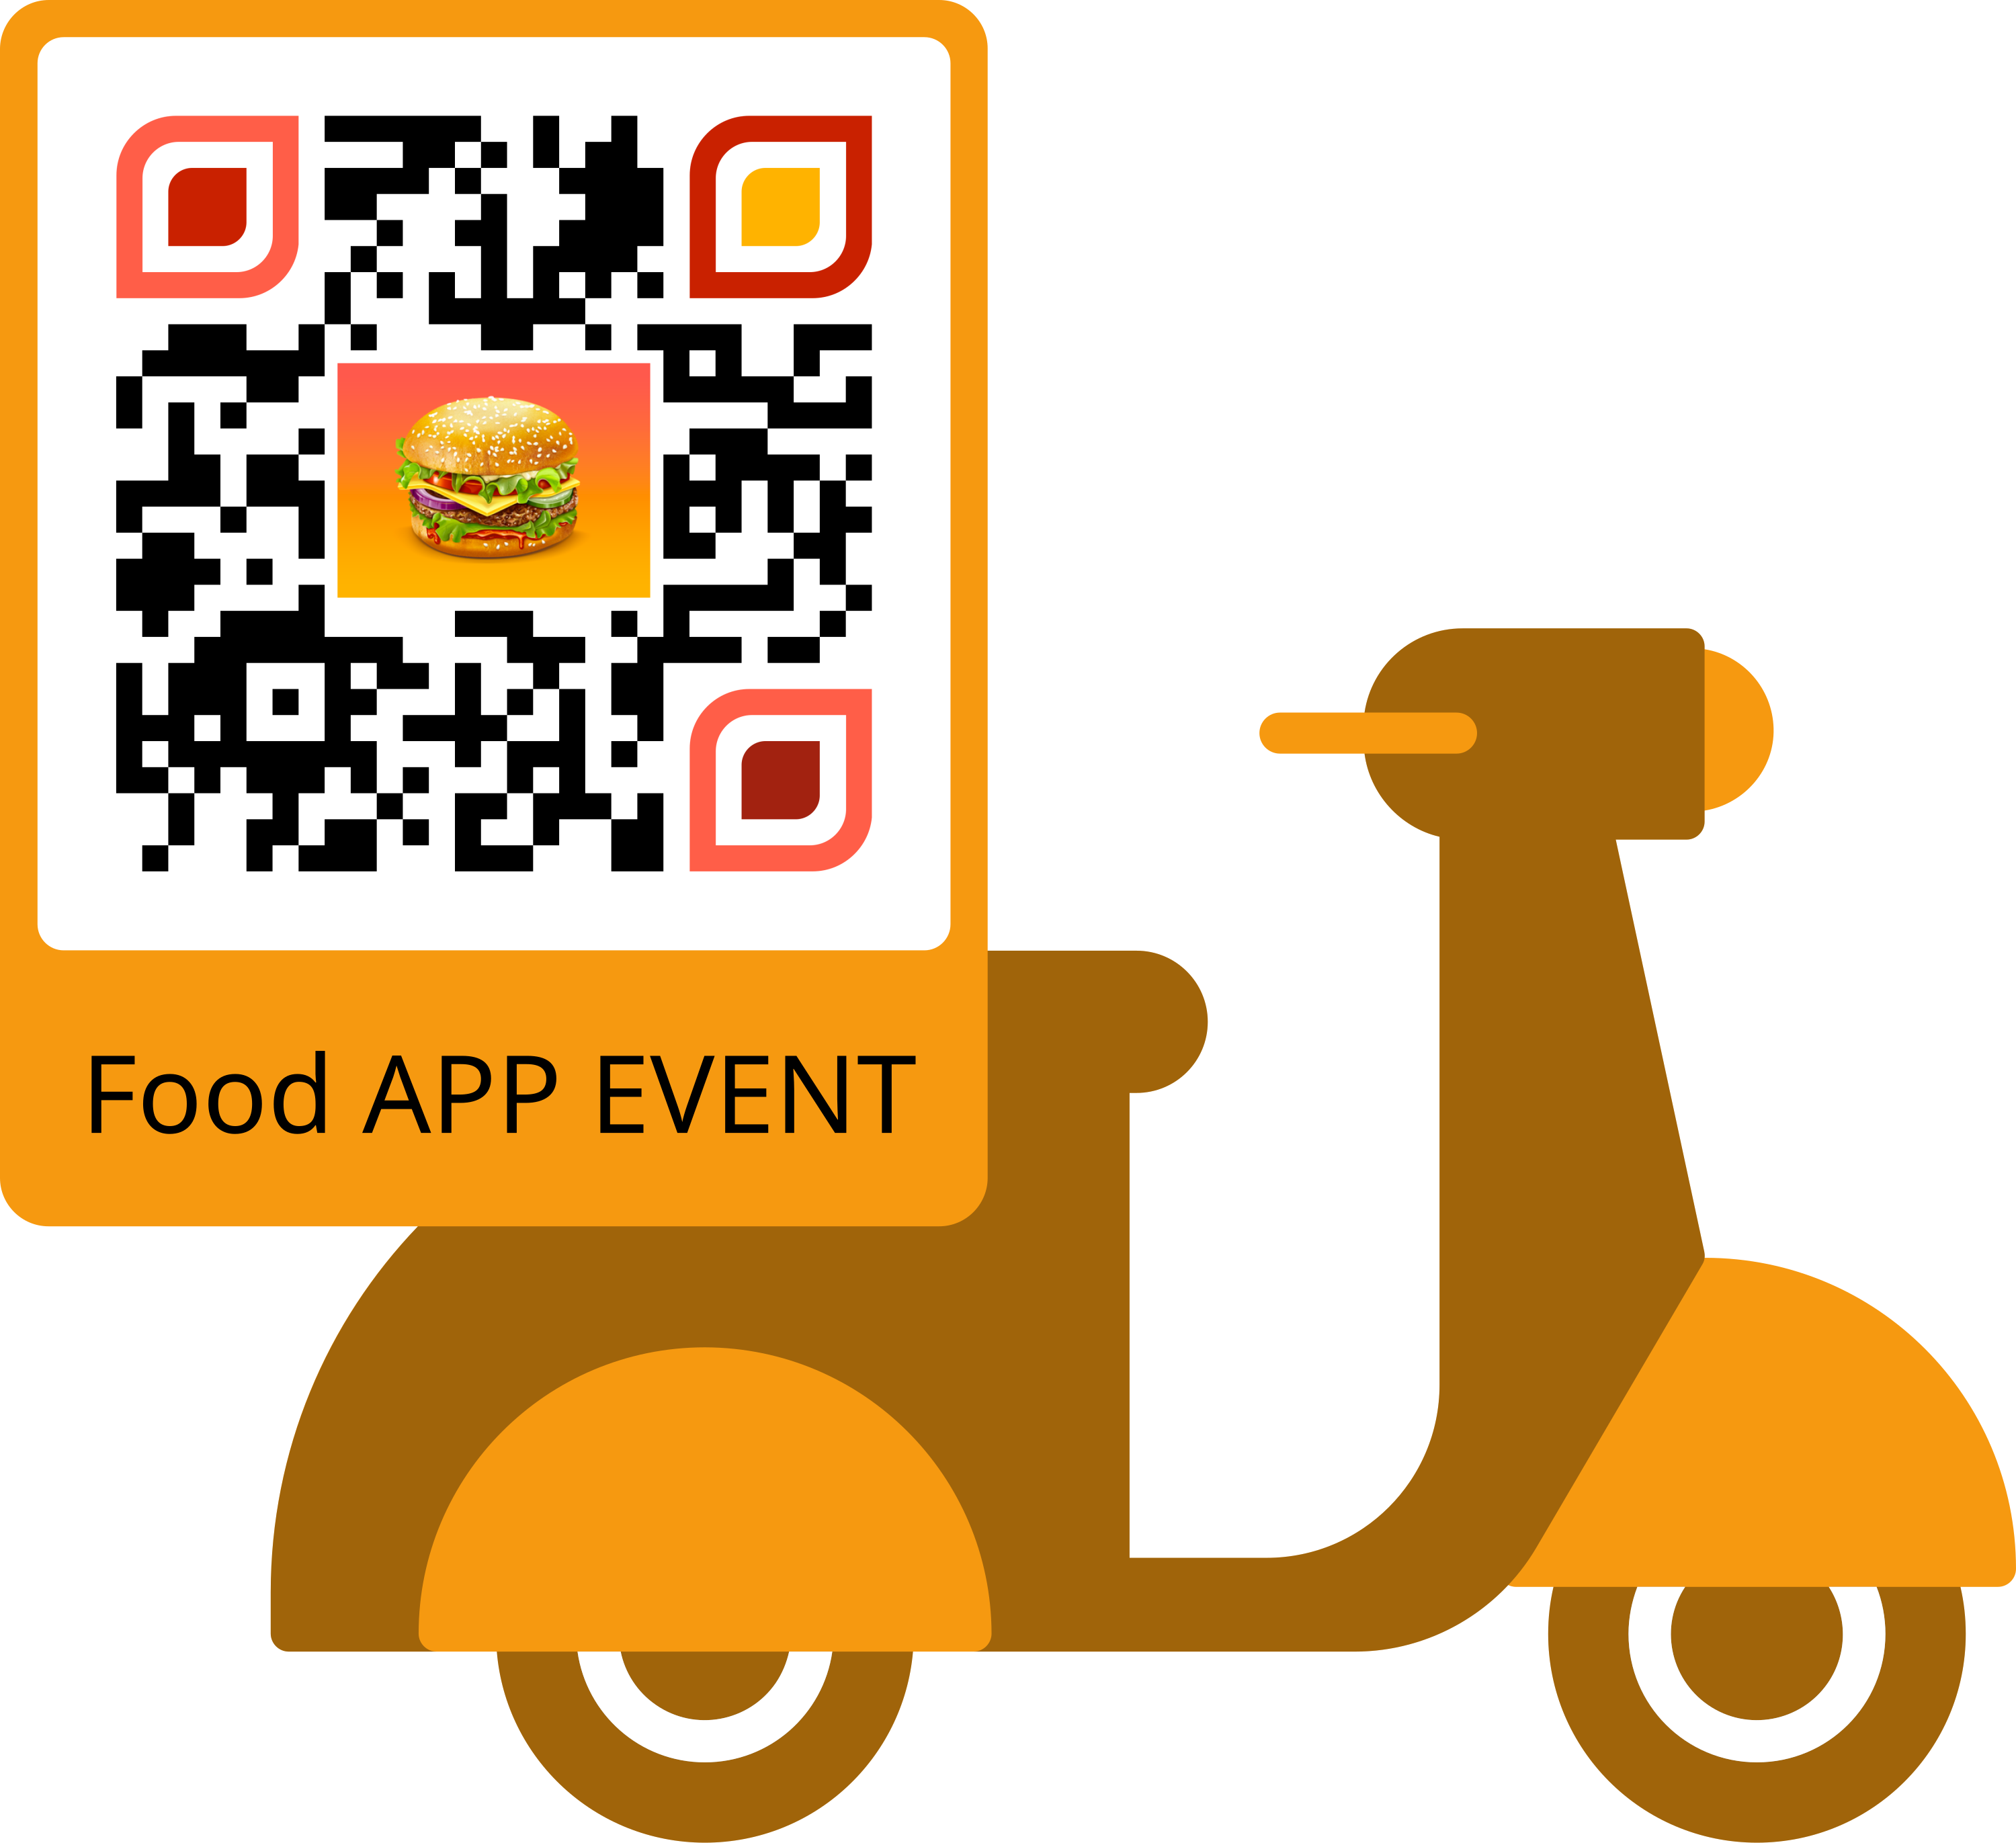 Food App event